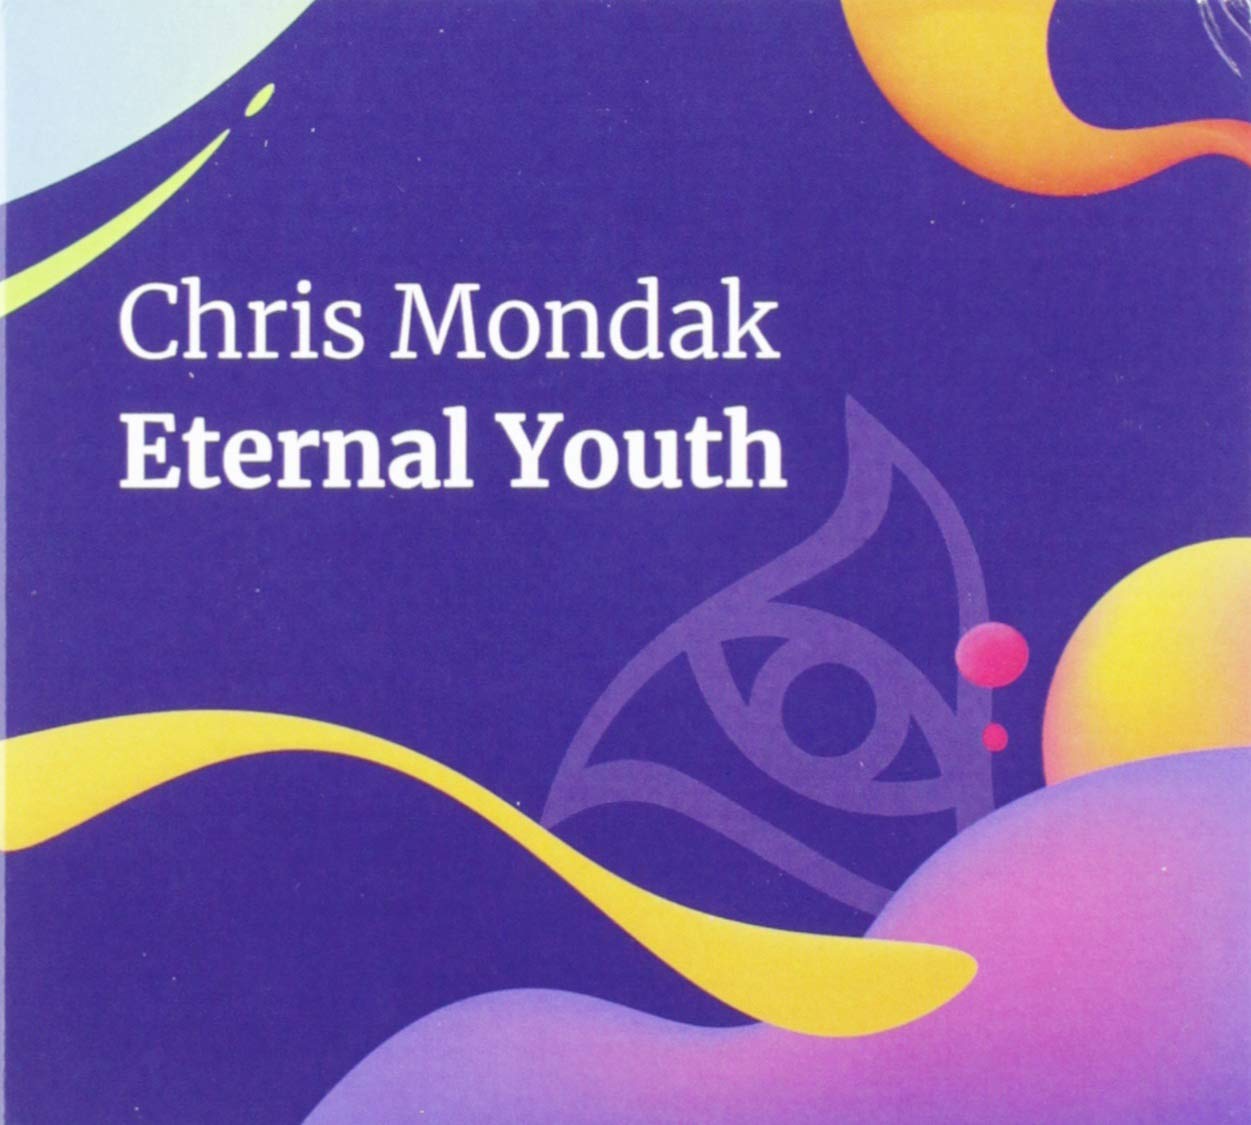 CHRIS MONDAK - Eternal Youth cover 